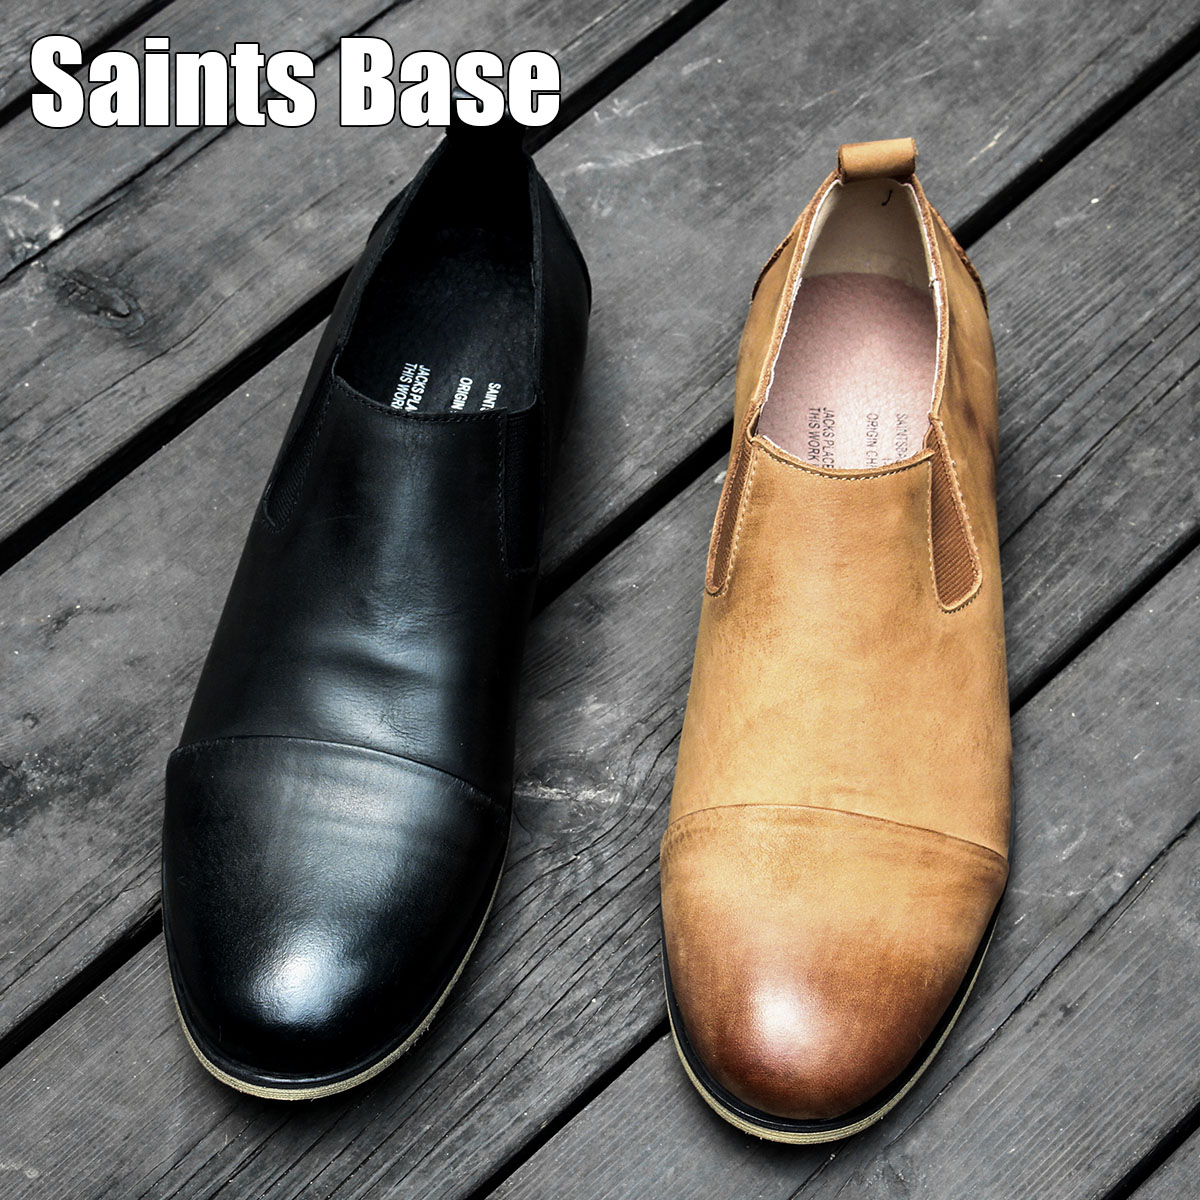 saints base shoes